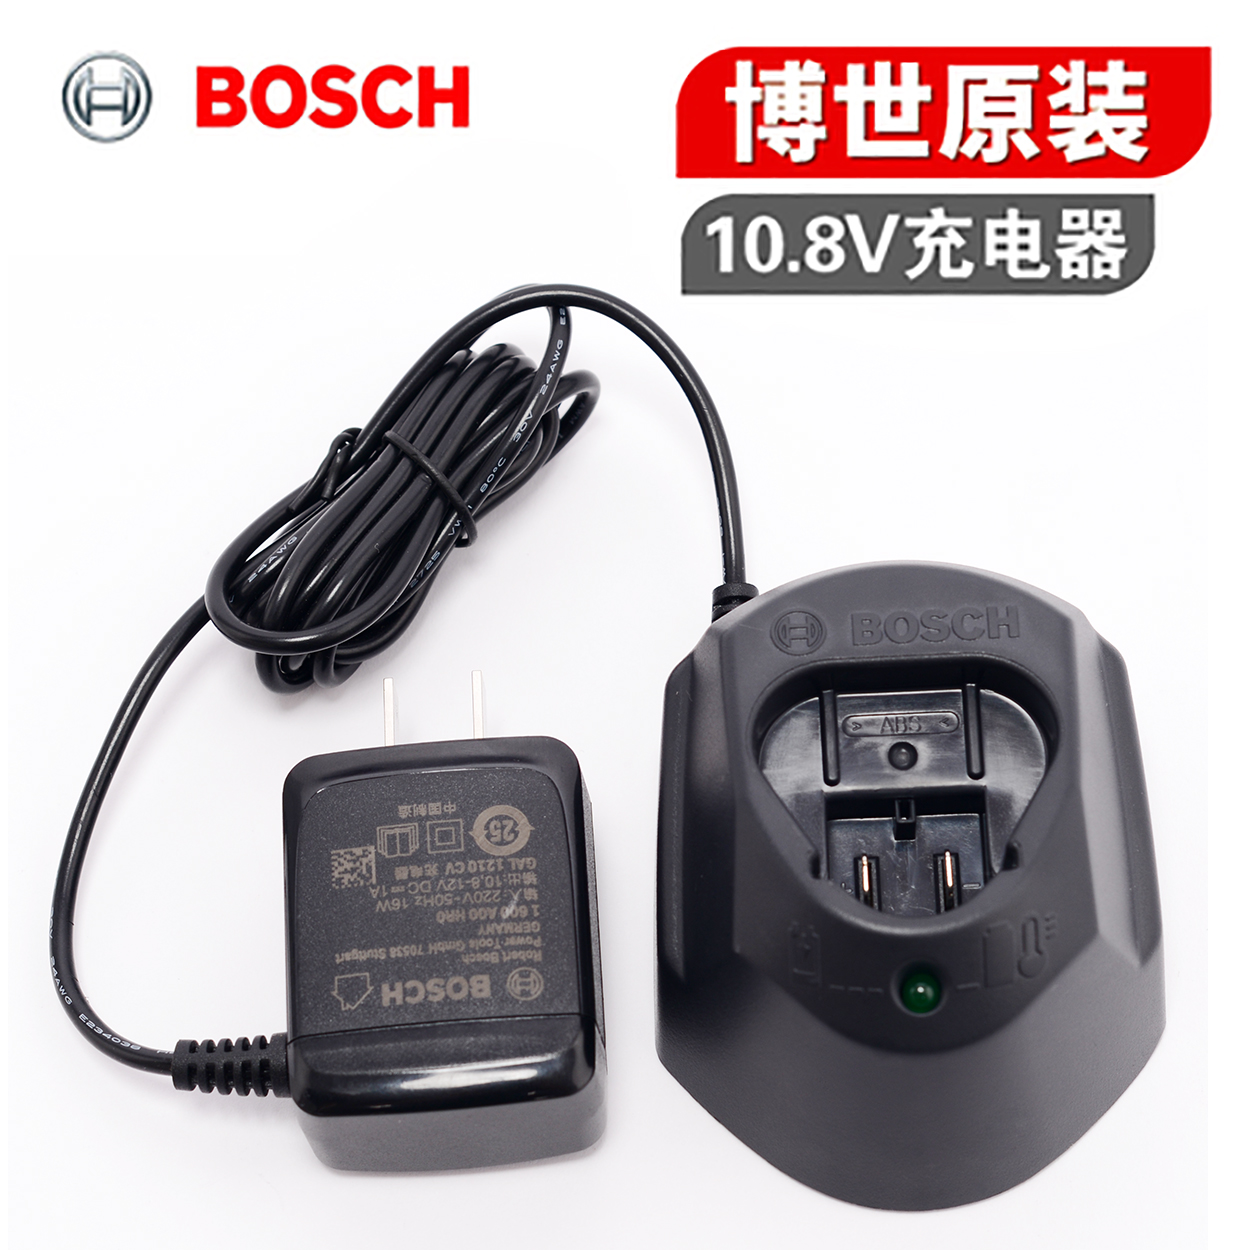 BOSCH博世12v锂电池GSB/GSR120-li博士手钻电充电器10.8v电动工具-图0